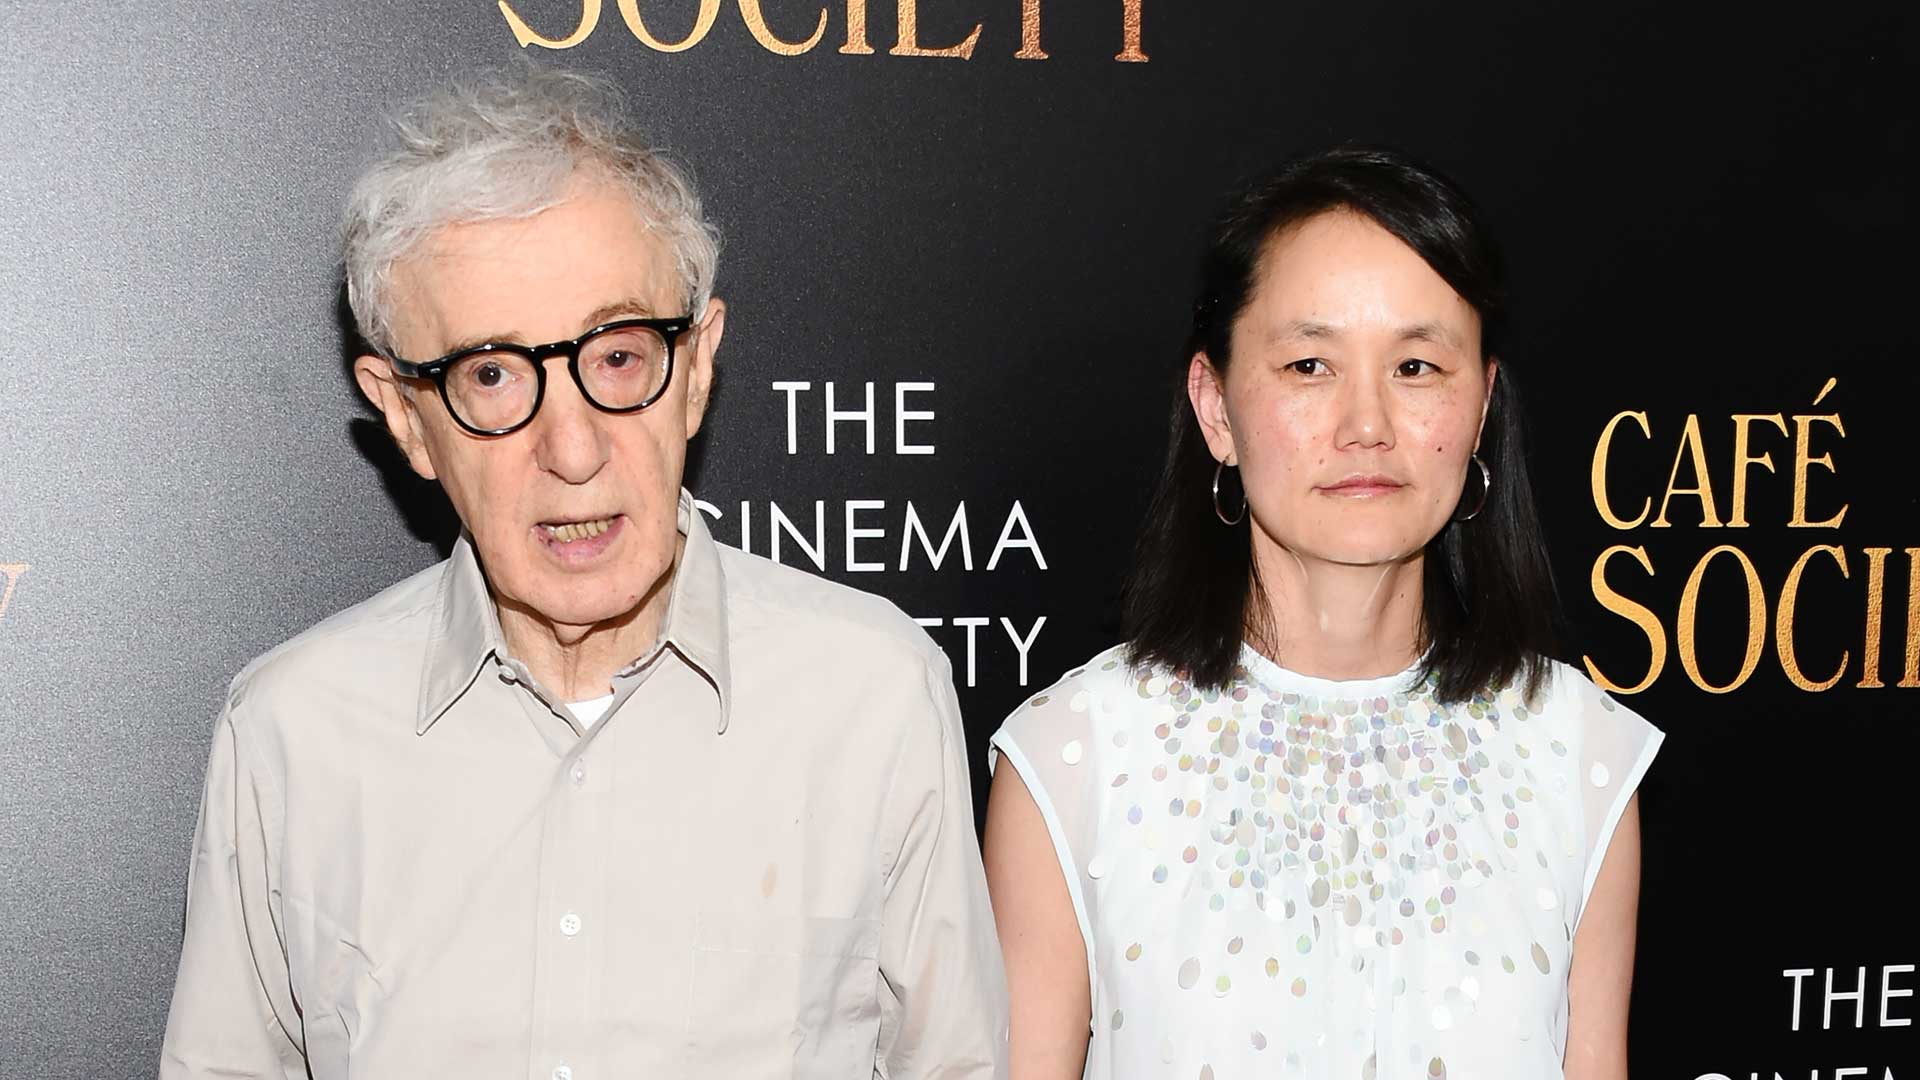 Soon-Yi Previn sale en defensa de Woody Allen